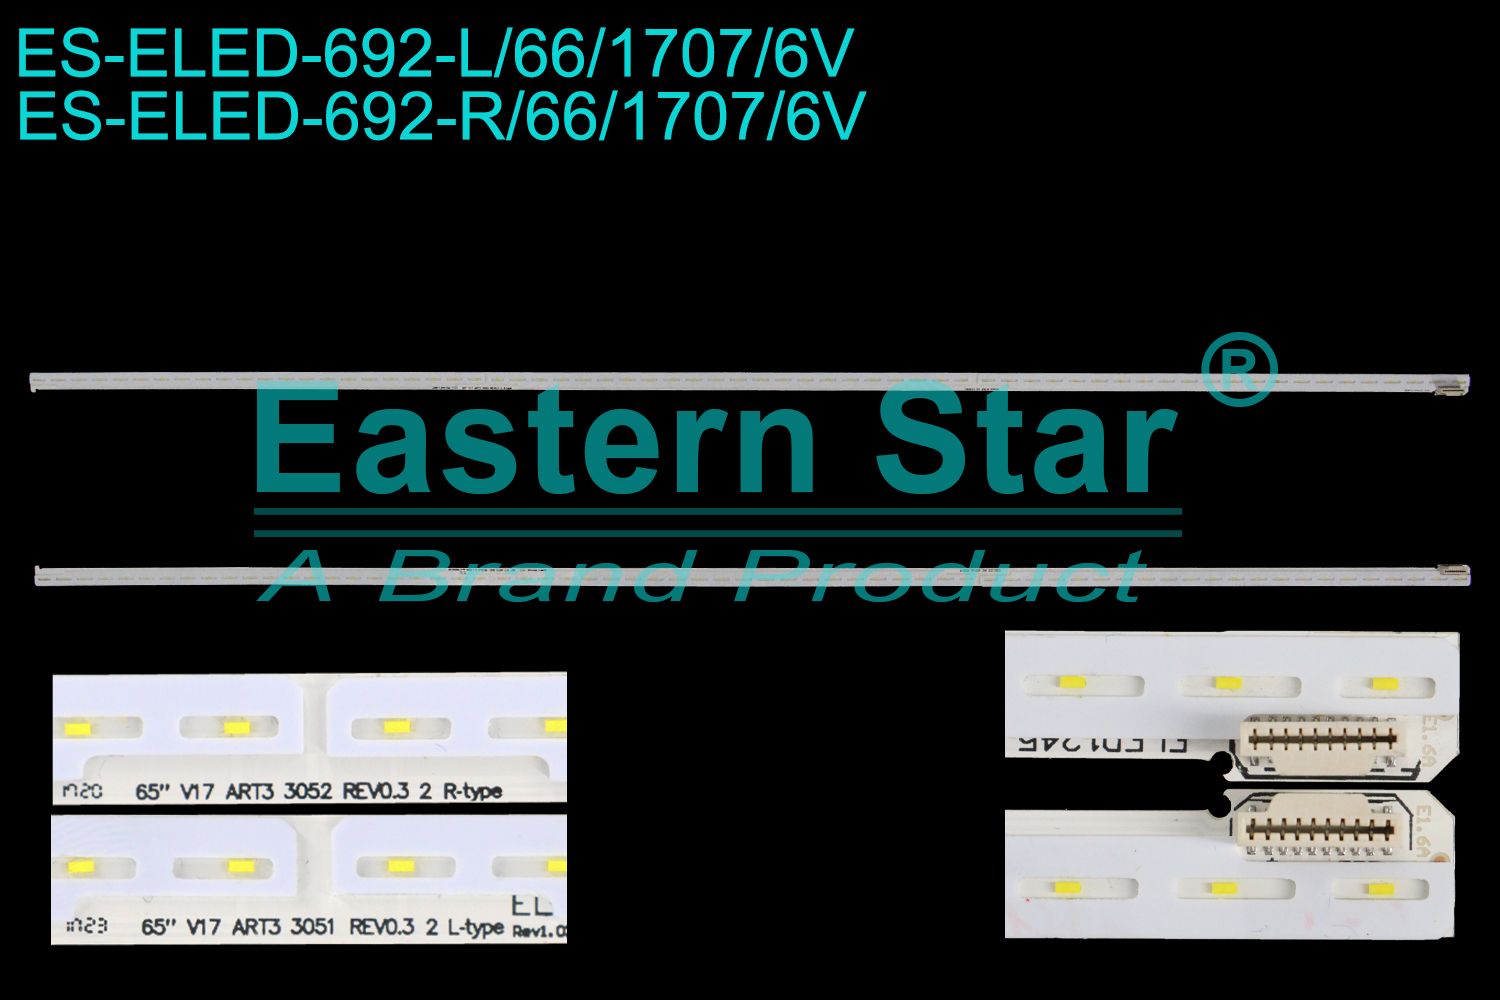 ES-ELED-692 ELED/EDGE TV backlight use for 65'' Lg 65UV340C-UB  L: 65" V17 ART3 3051 REV0.3 2 L-Type Rev1.0XS221128 U31123 A2 6916L3051A  R: 65" V17 ART3 3052 REV0.3 2 R-type TM0923 92 6916L3052A LED STRIPS(2)